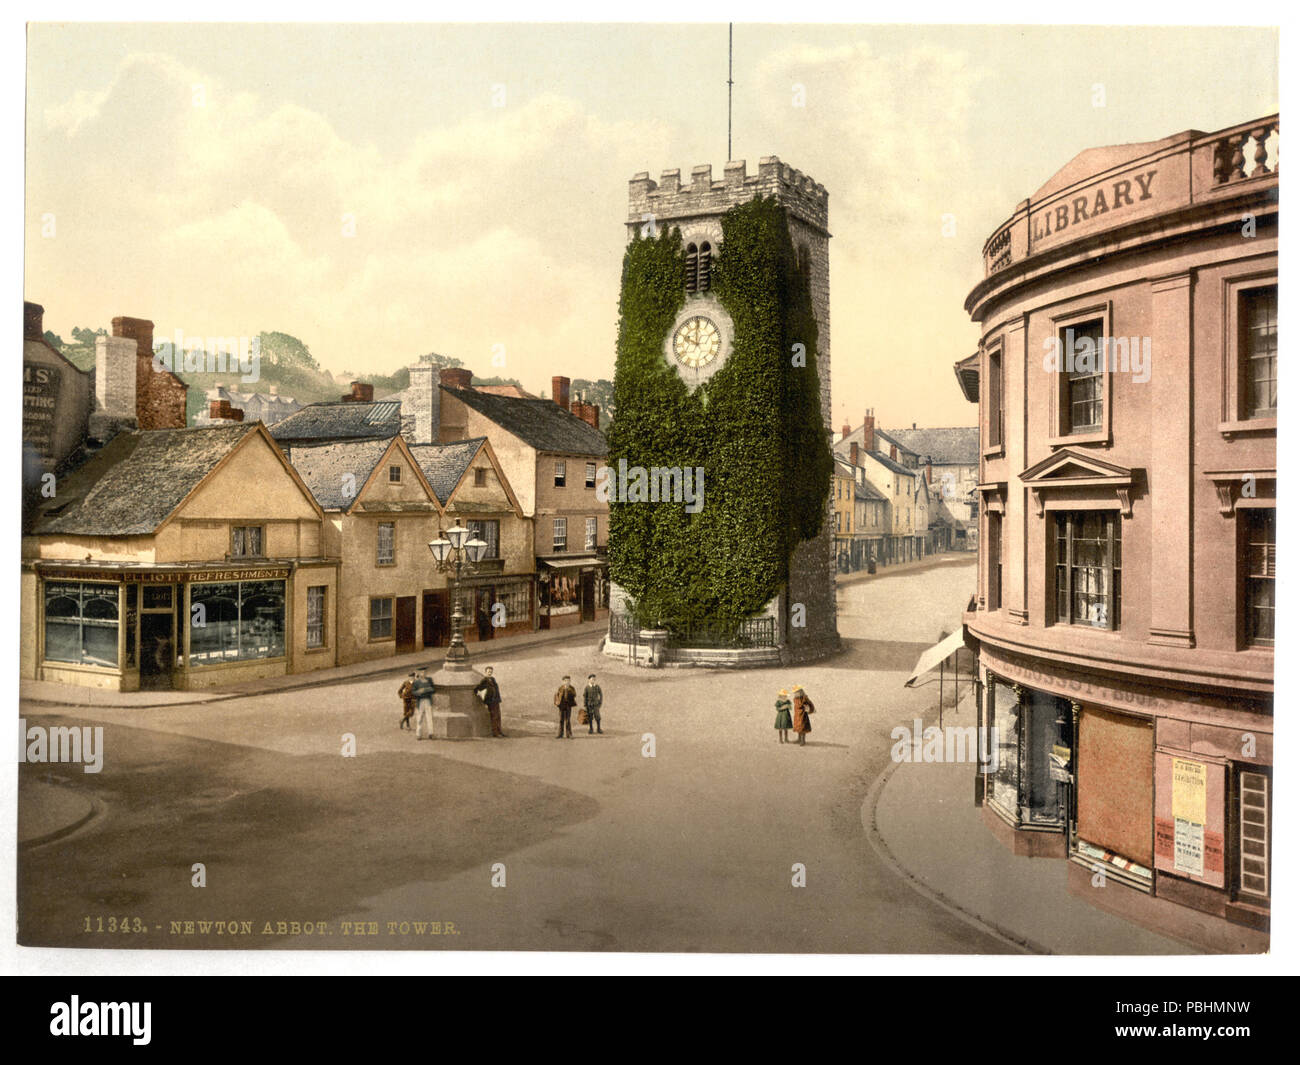 1708 Der Turm, Newton Abbott, England - LCCN 2002708008 Stockfoto